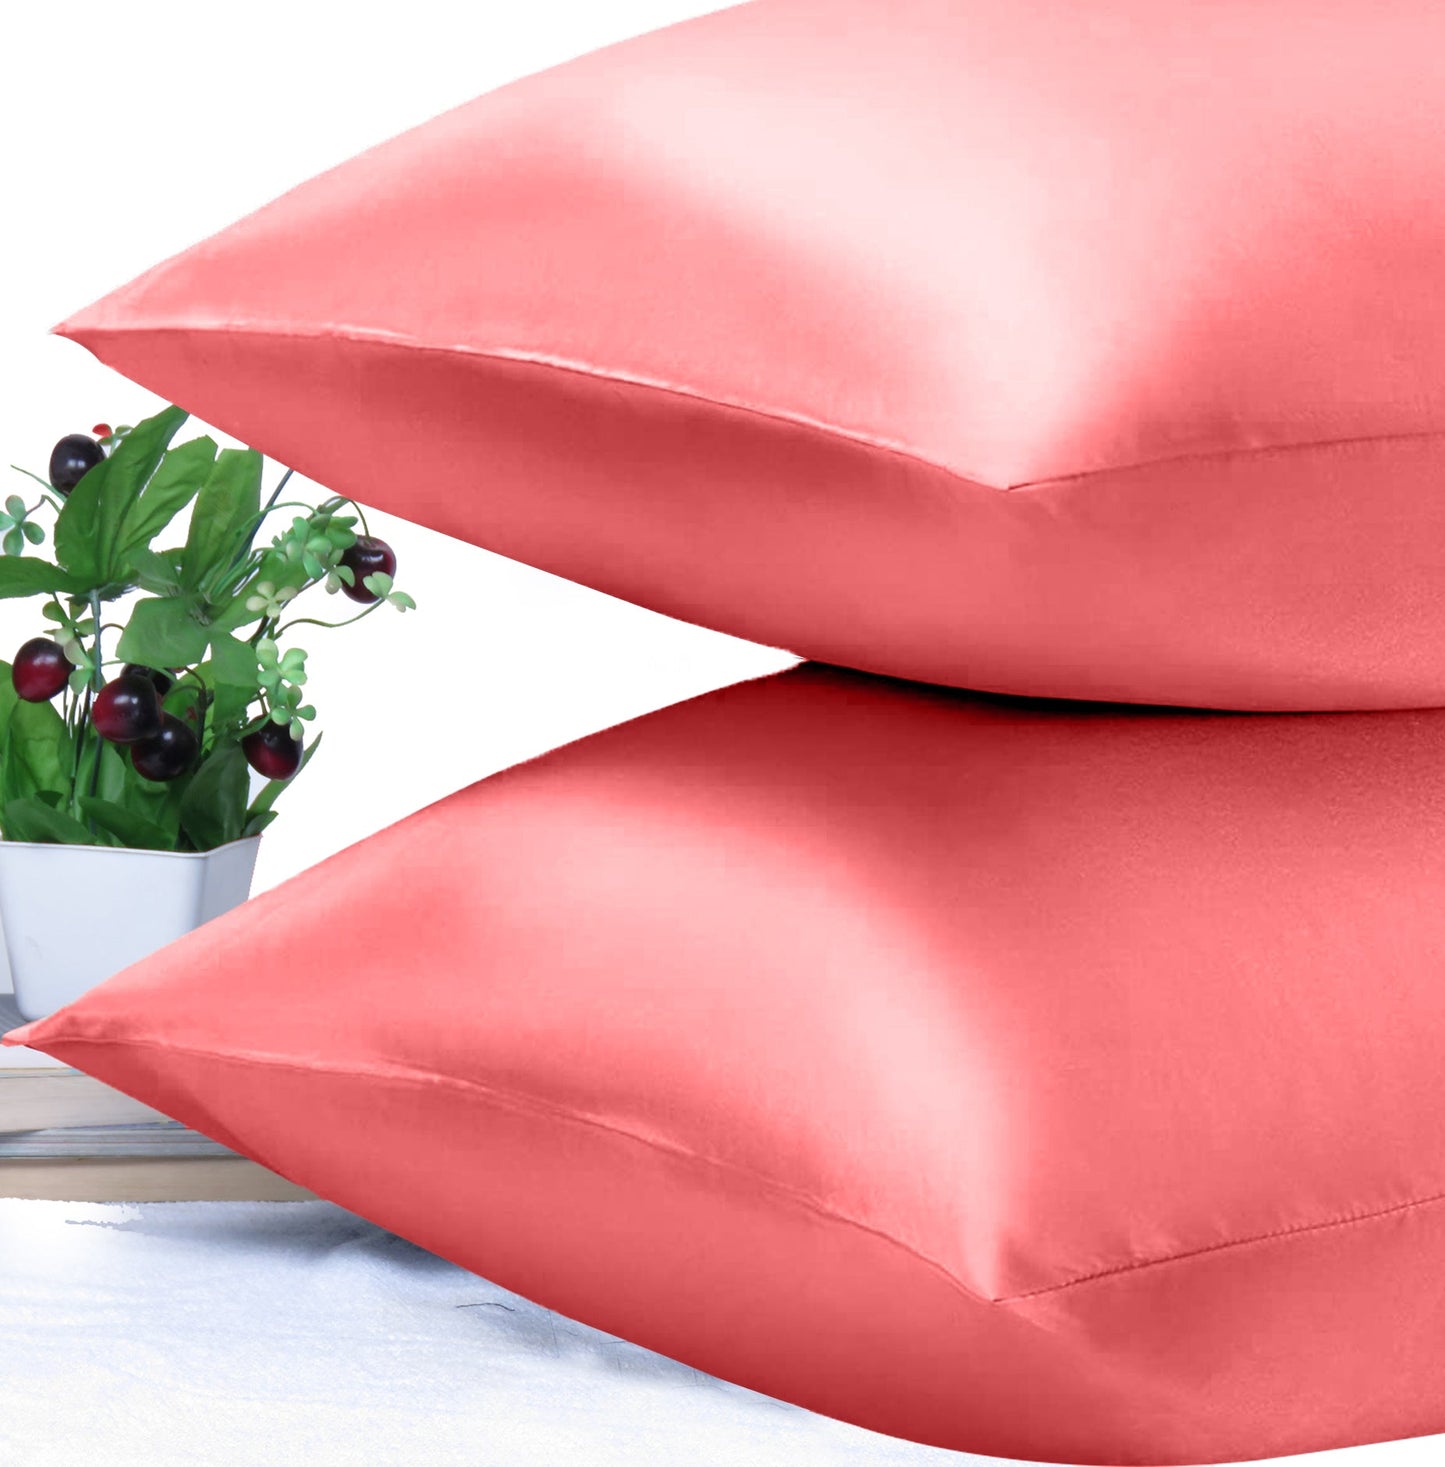 Luxury Soft Plain Satin Silk Pillowcases in Set of 2 - Deep Sea Coral